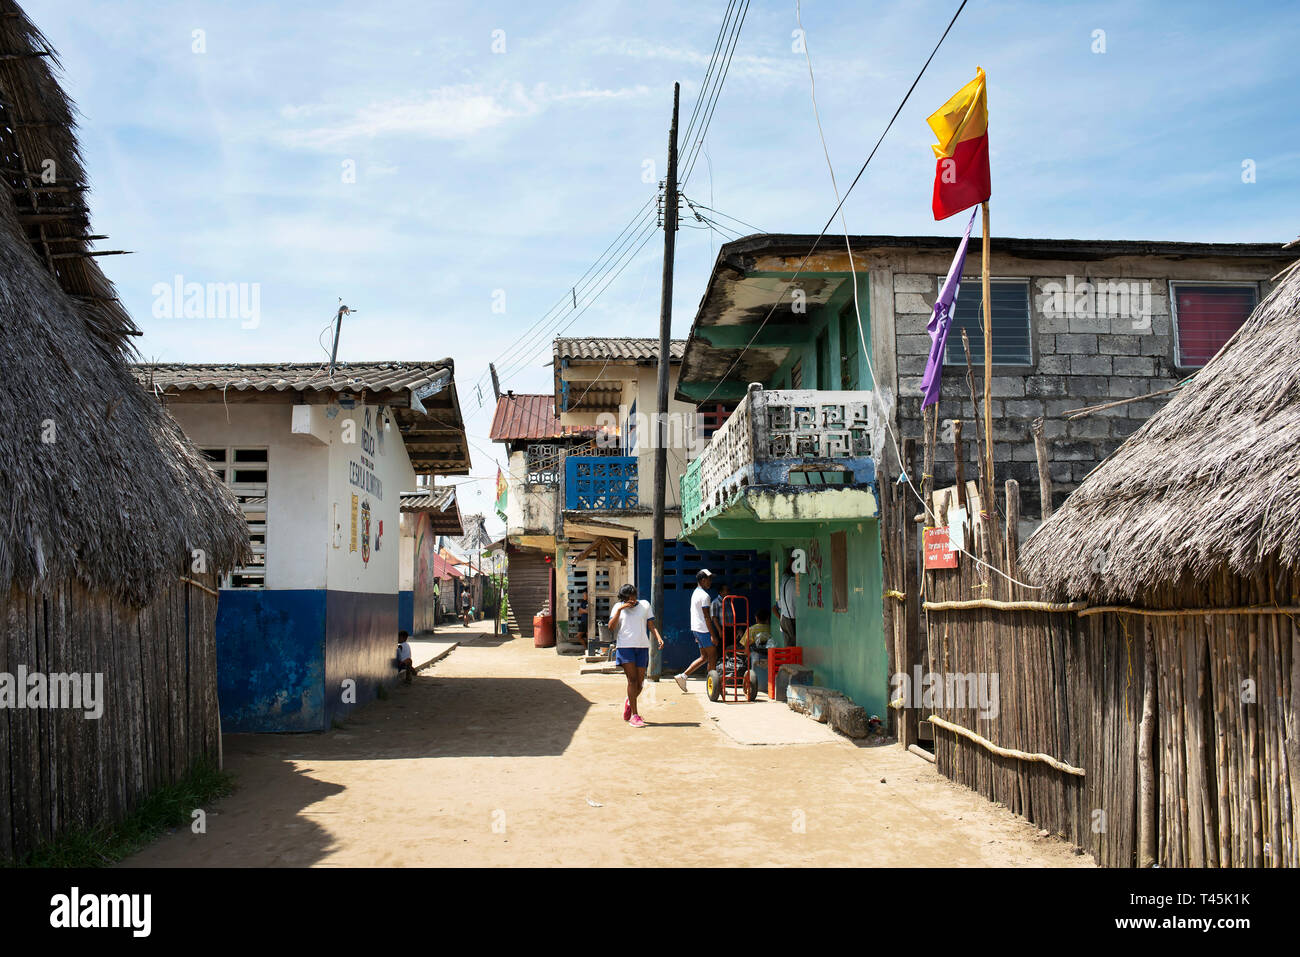 Street views of mixed housing (cabanas and brick houses) in Carti Sugdub; one of the Guna Yala indigenous villages. San Blas Islands, Panama, 2018 Stock Photo